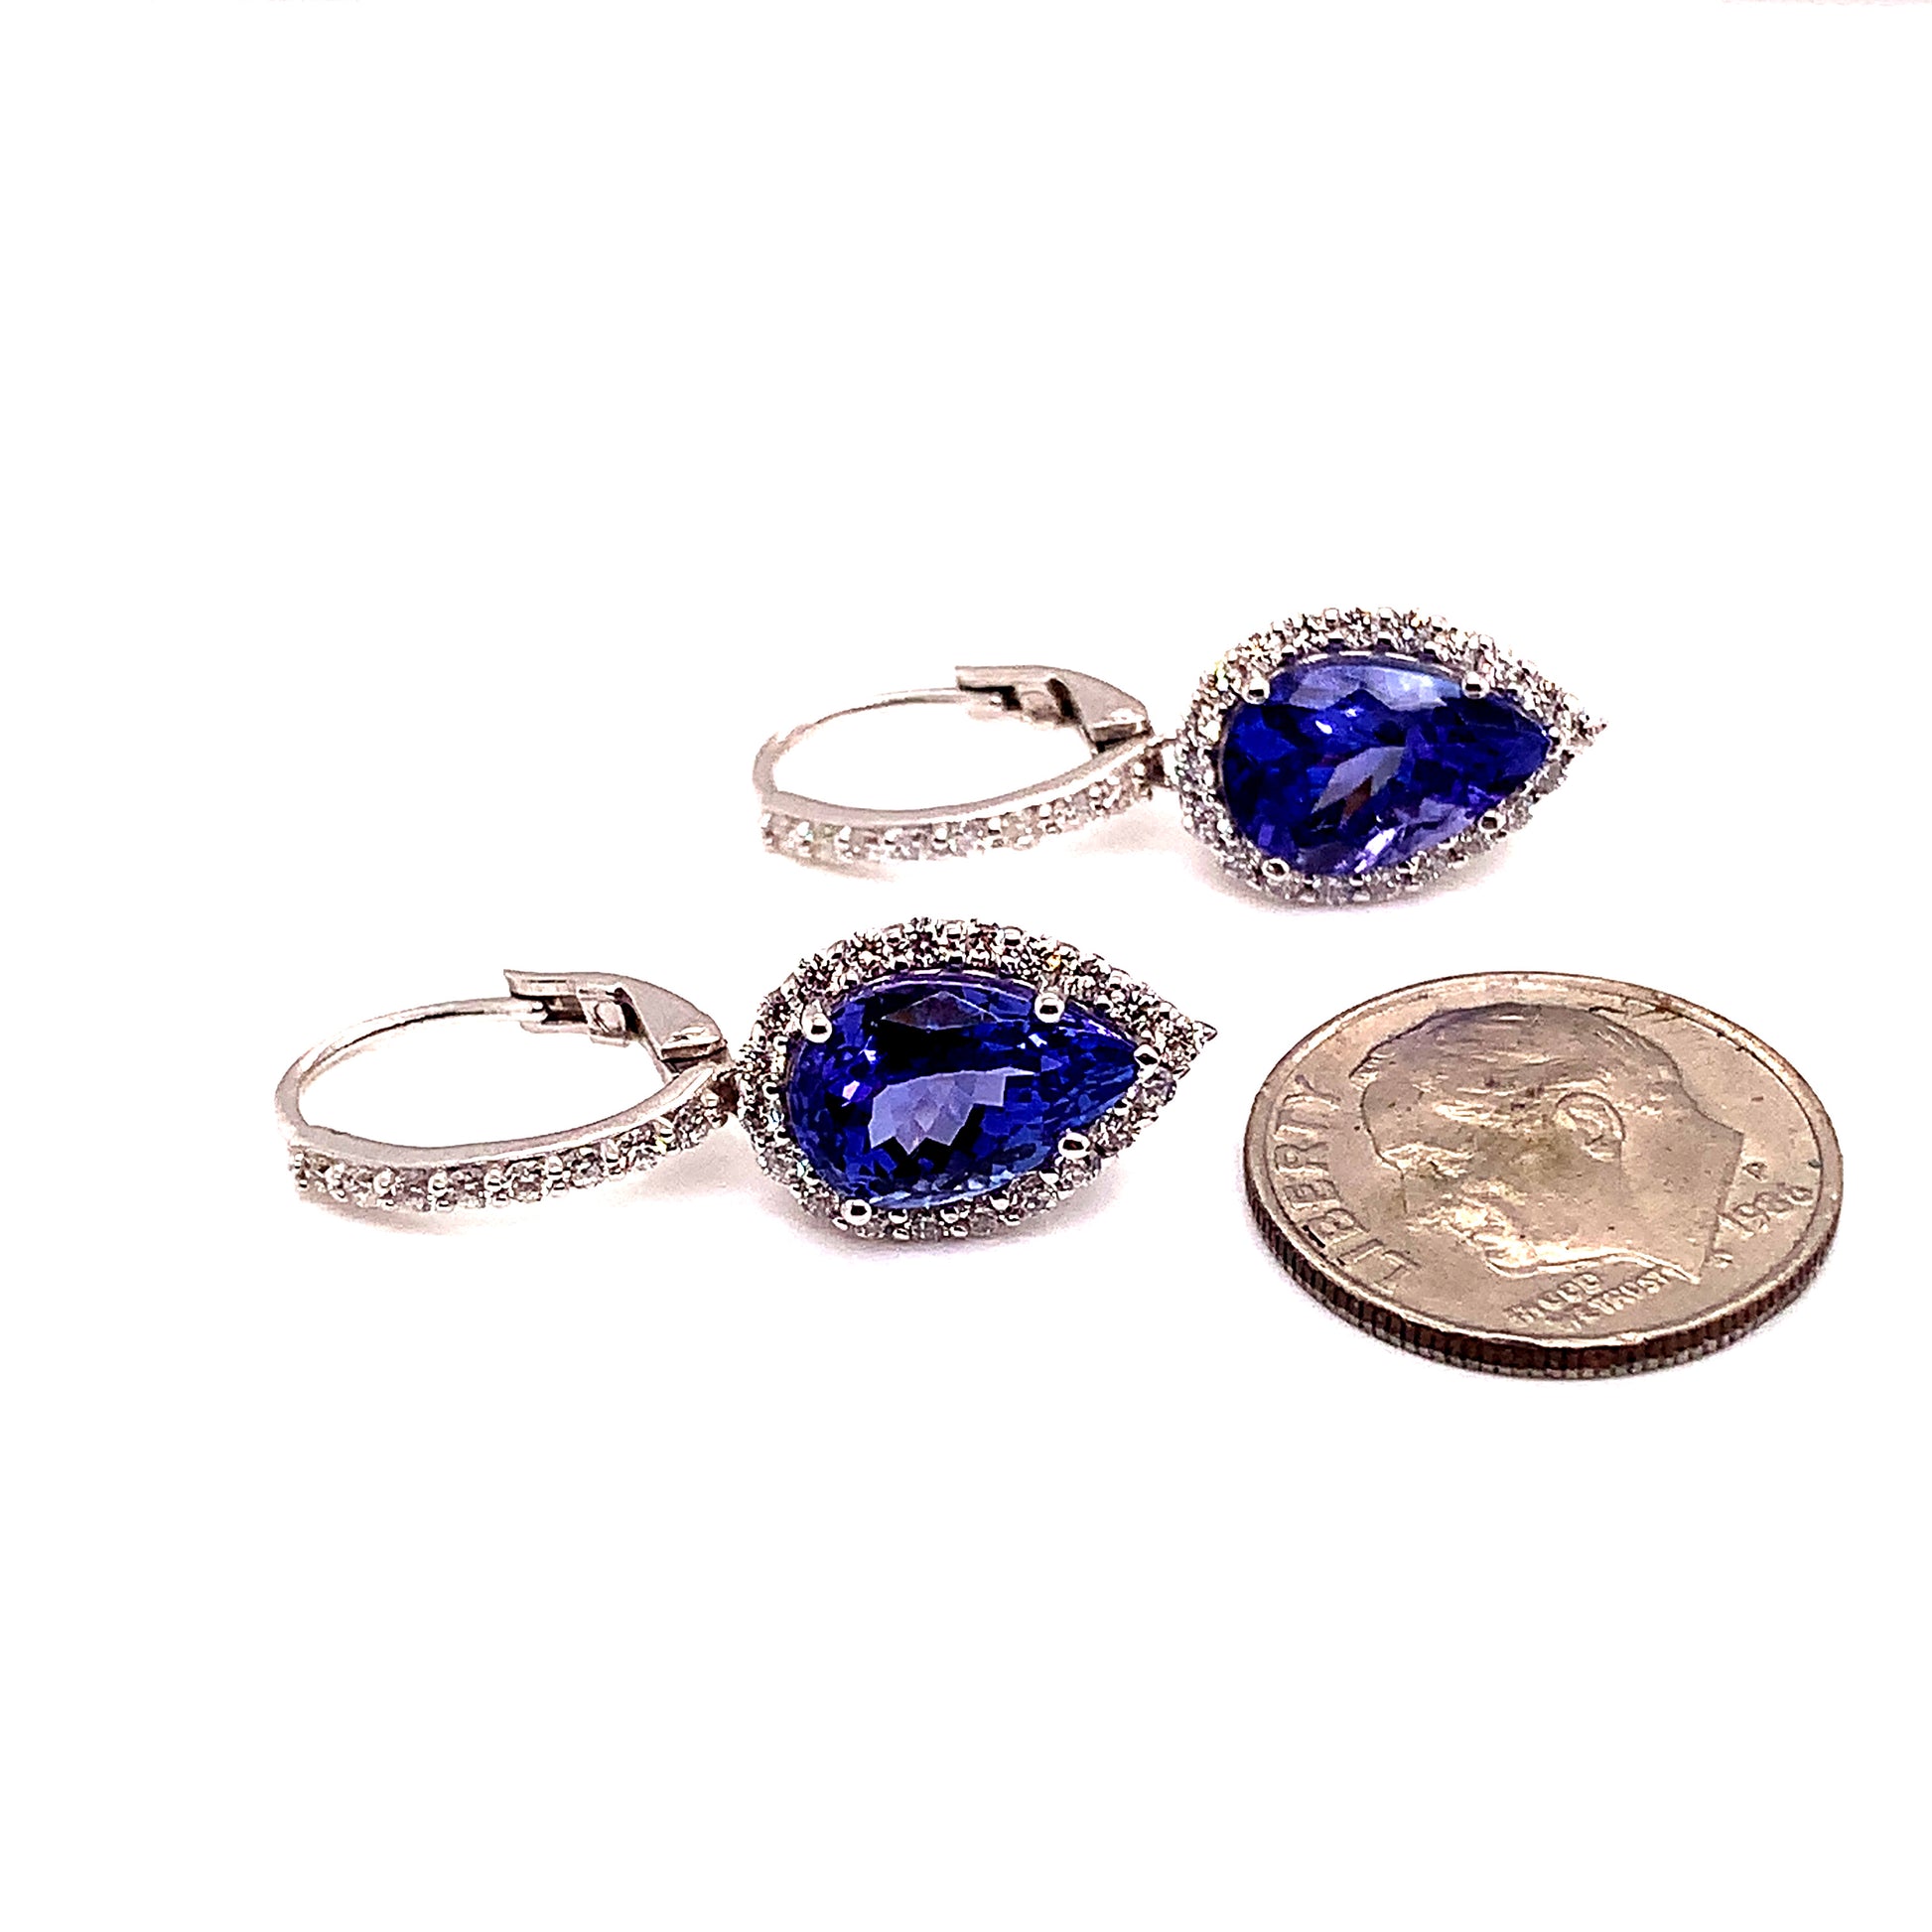 Natural Tanzanite Diamond Earrings 14k Gold 5.85 TCW Certified $5,975 118929 - Certified Estate Jewelry